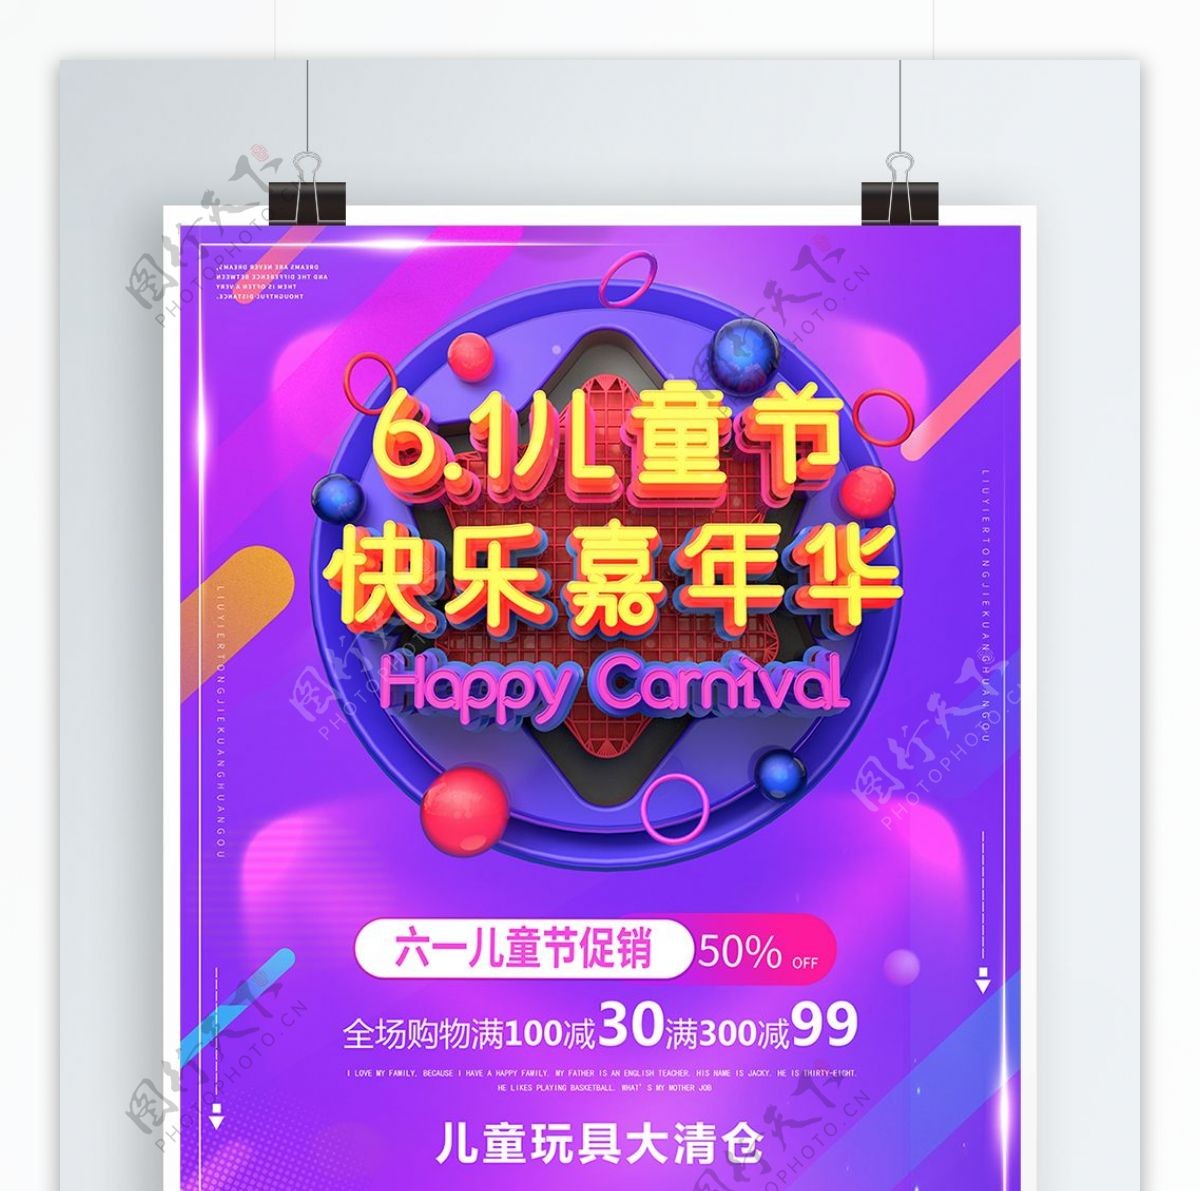 C4D61儿童节动感炫彩促销海报